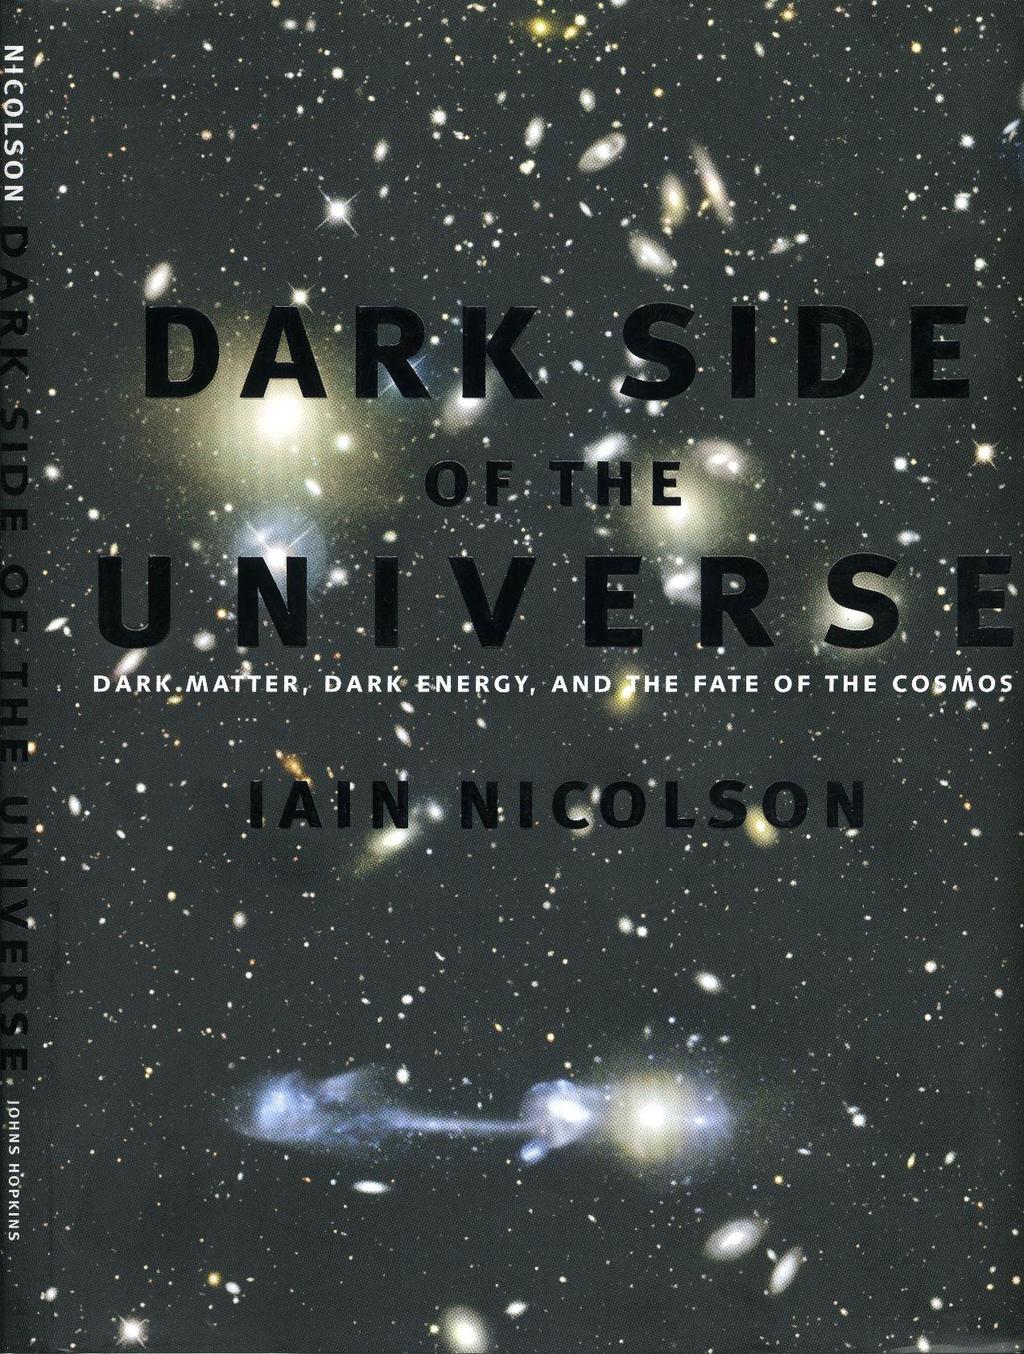 Dark Side Kosmologie of the